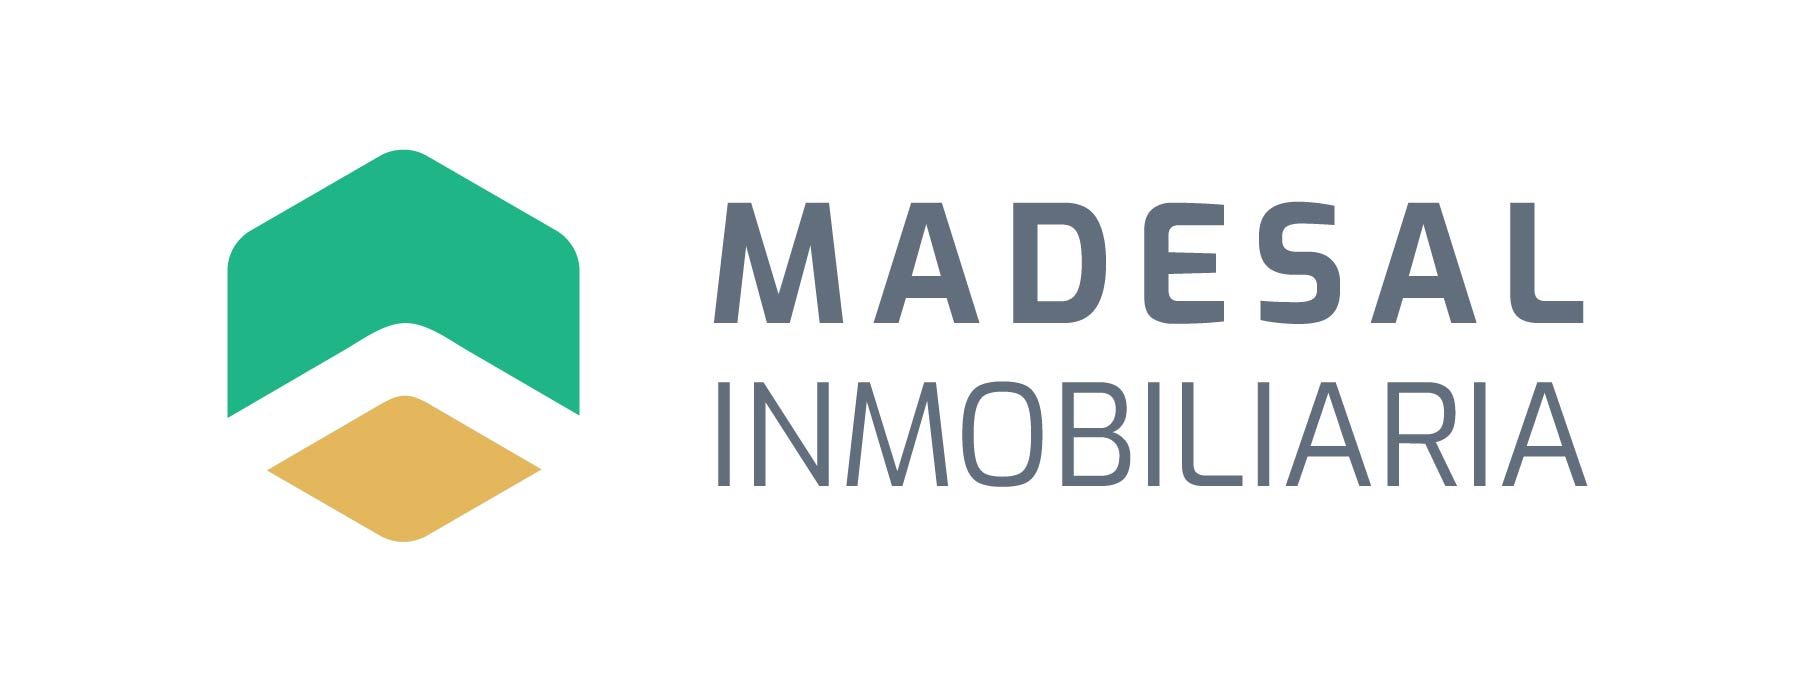 Logo Madesal Inmobiliaria-01-1